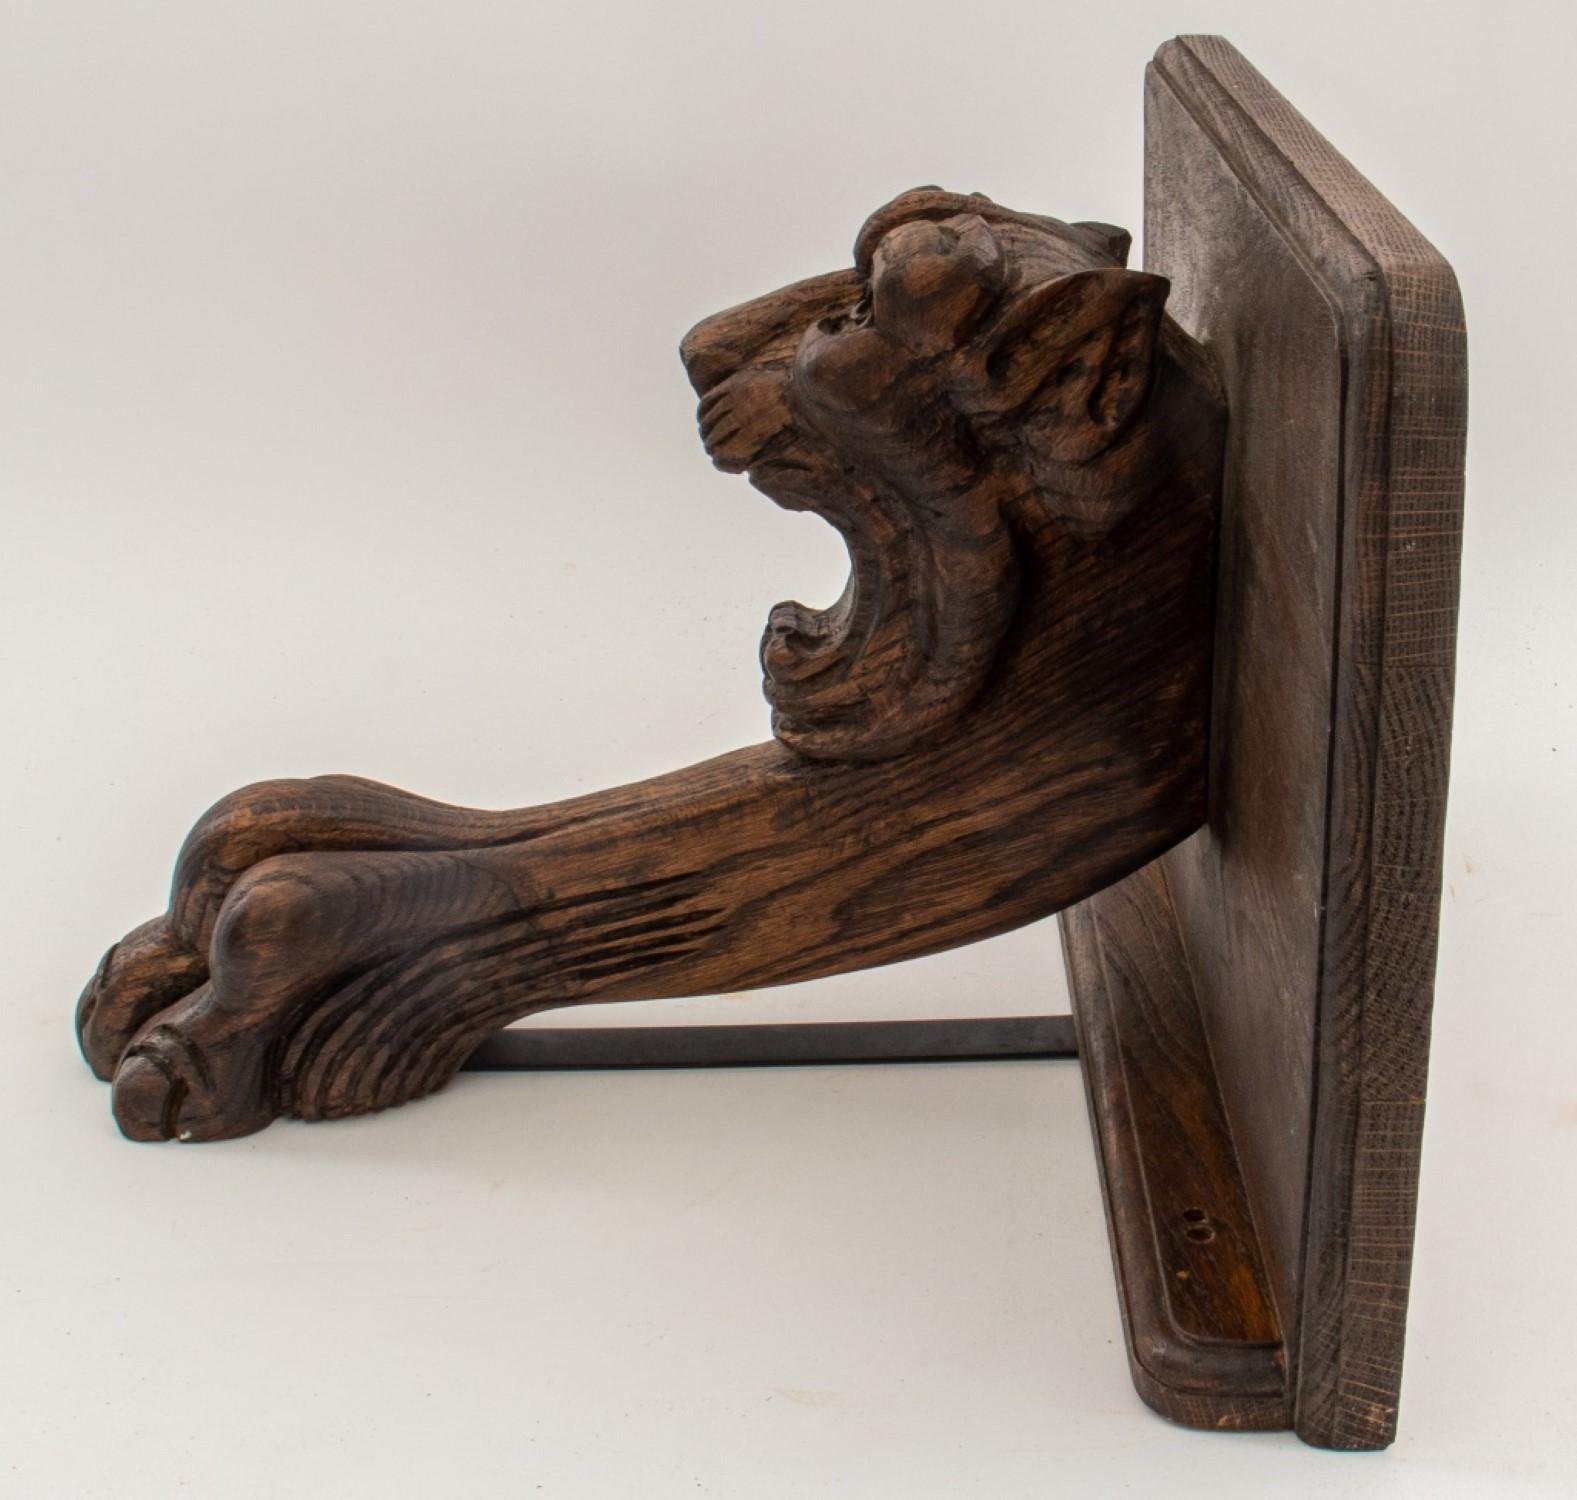 The dimensions for the Renaissance Revival Gilded Age Oak Lion Bracket are approximately:

Dealer: S138XX